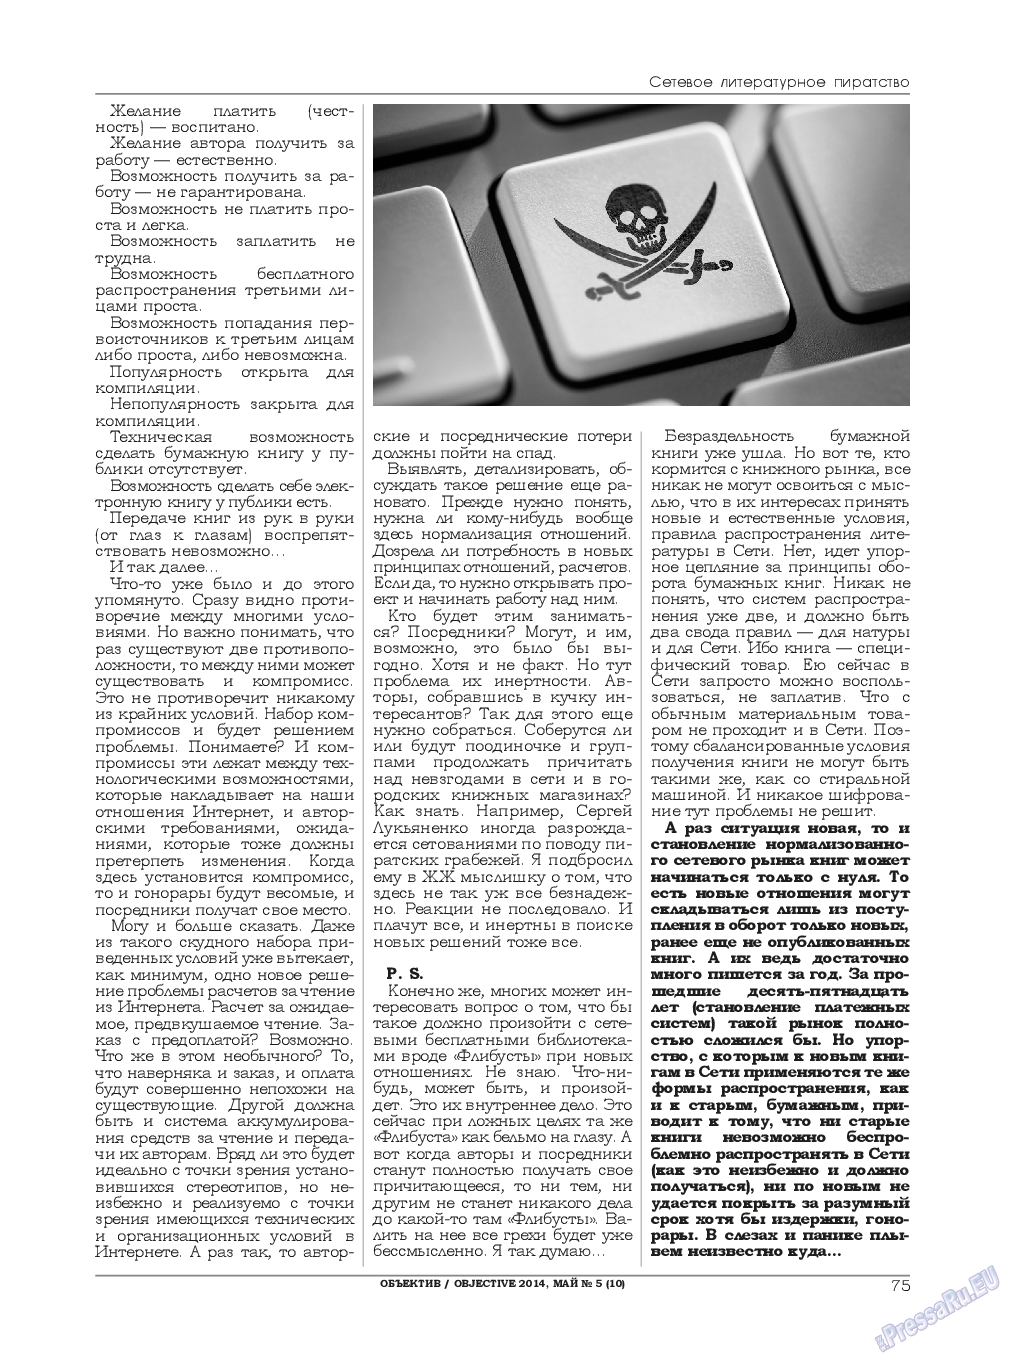 Объектив EU, журнал. 2014 №5 стр.75